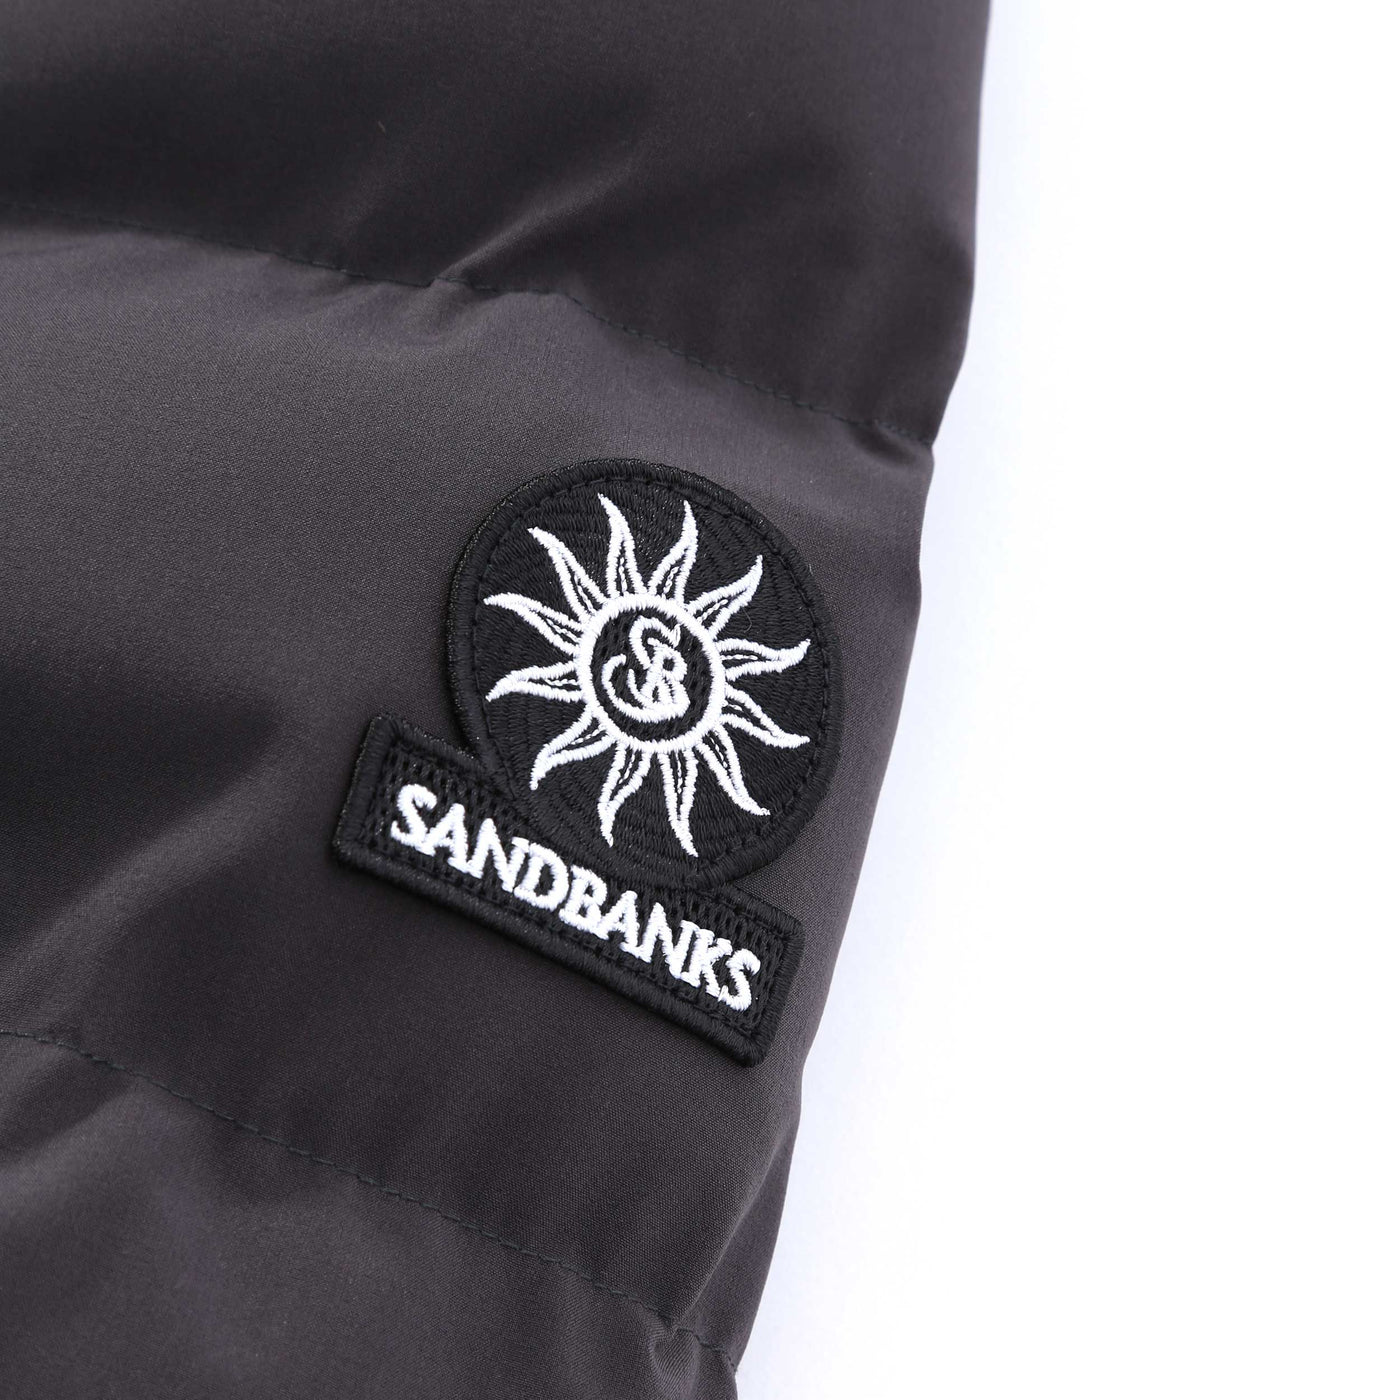 Sandbanks Banks Puffer Jacket in Charcoal Logo